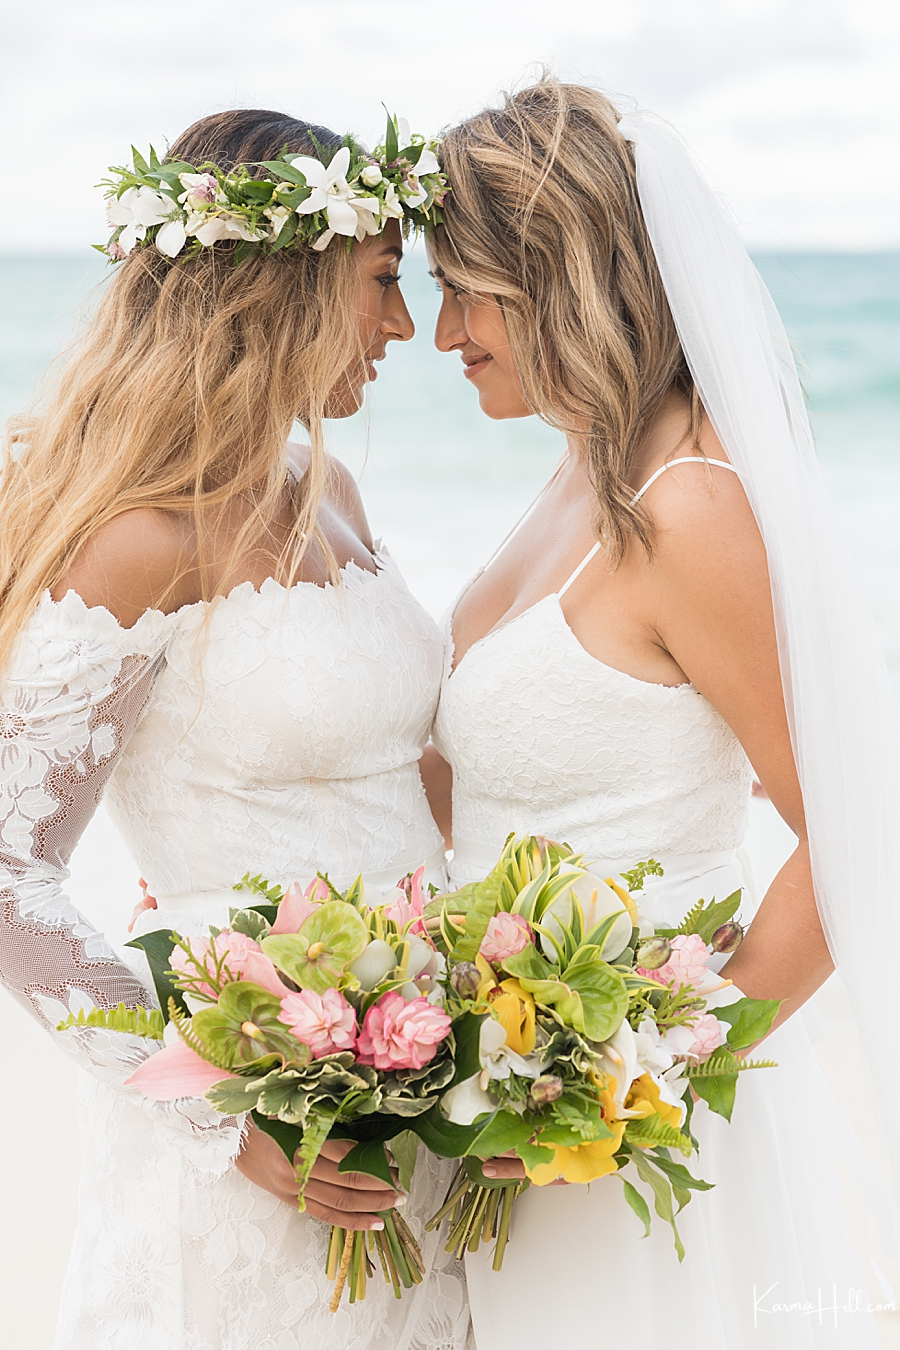 Oahu beach wedding photography